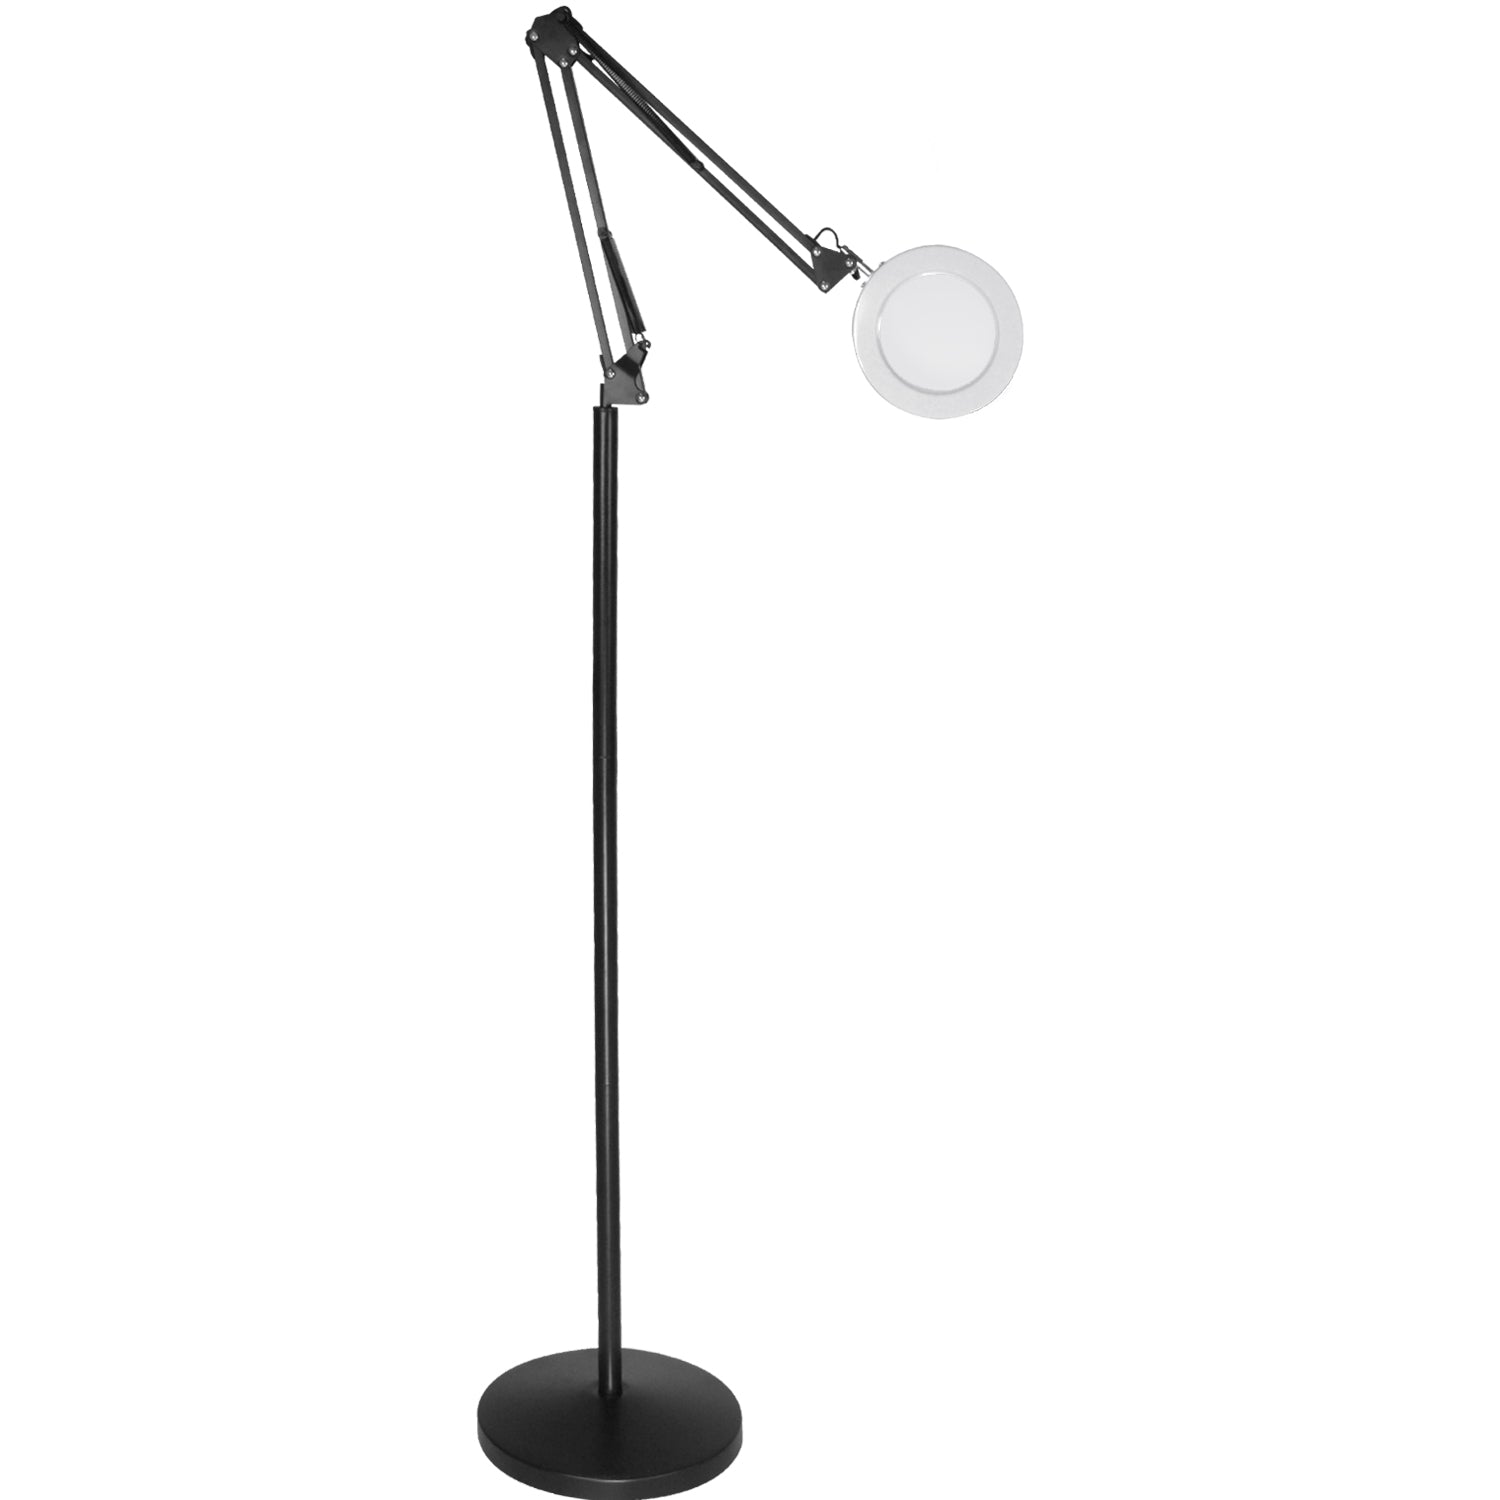 Lámpara LED con lupa (5x) y brazo articulado, negra Ste